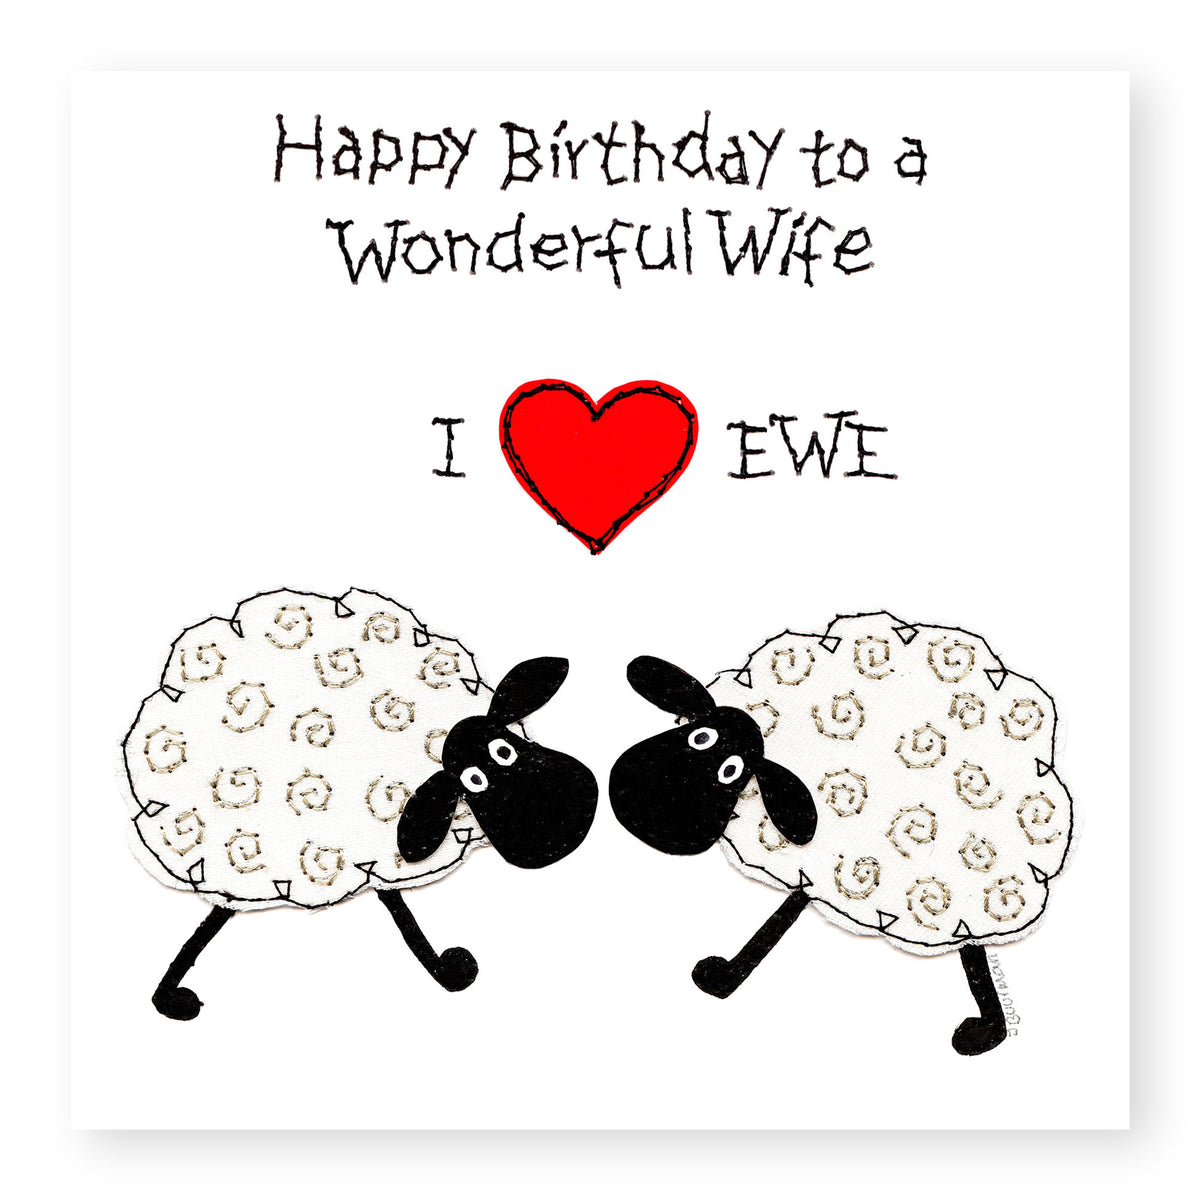 Love Ewe Wonderful Wife Birthday Card from Penny Black